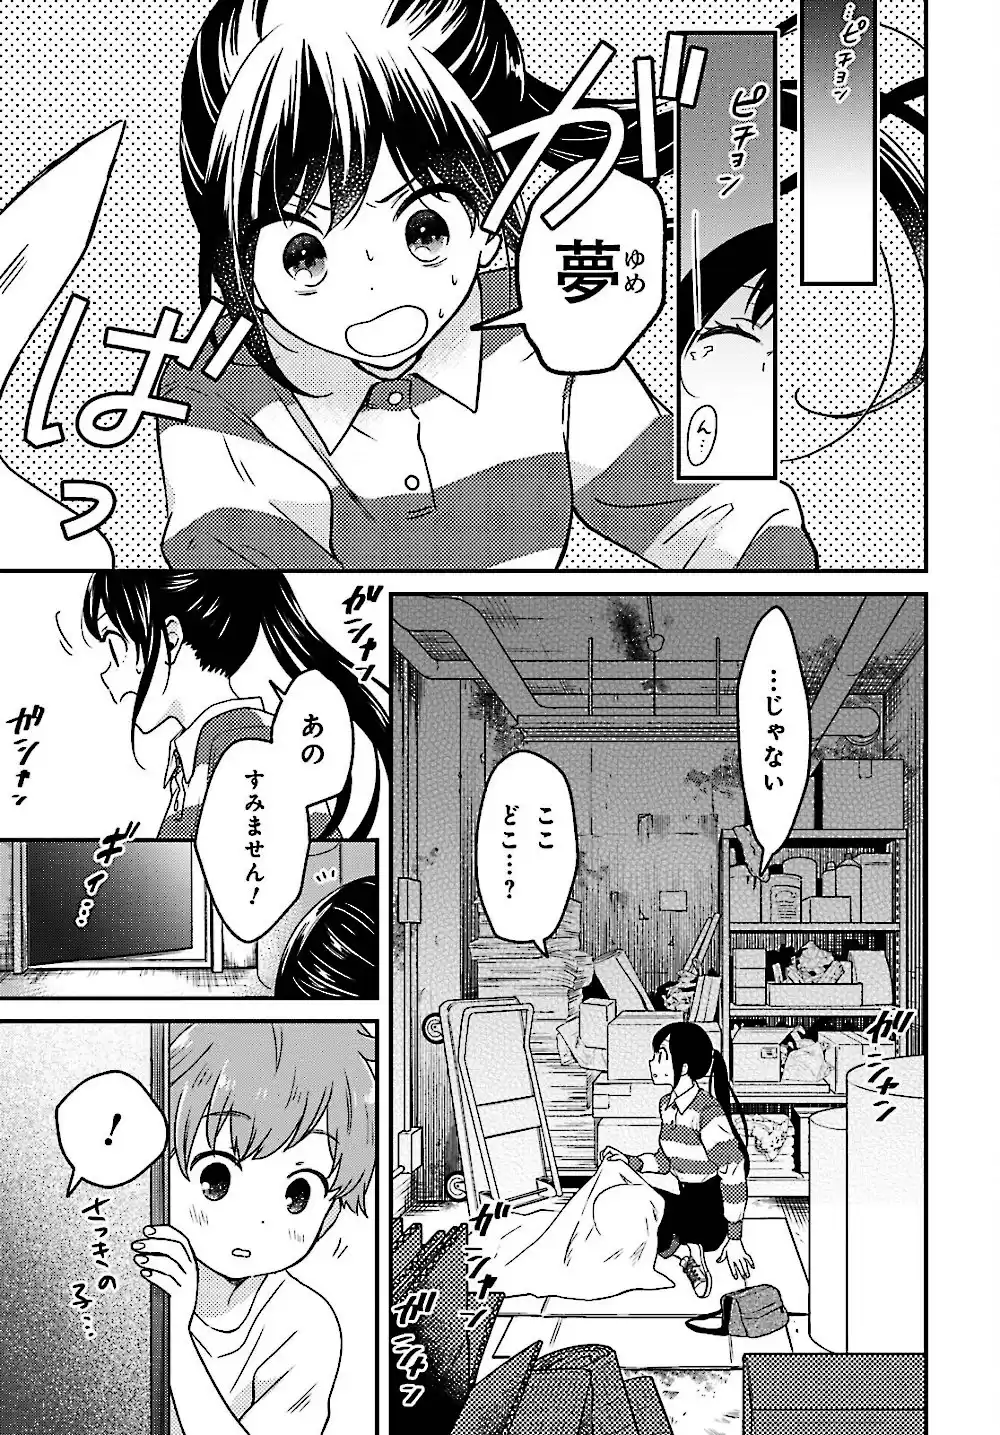 4 Manga E6is